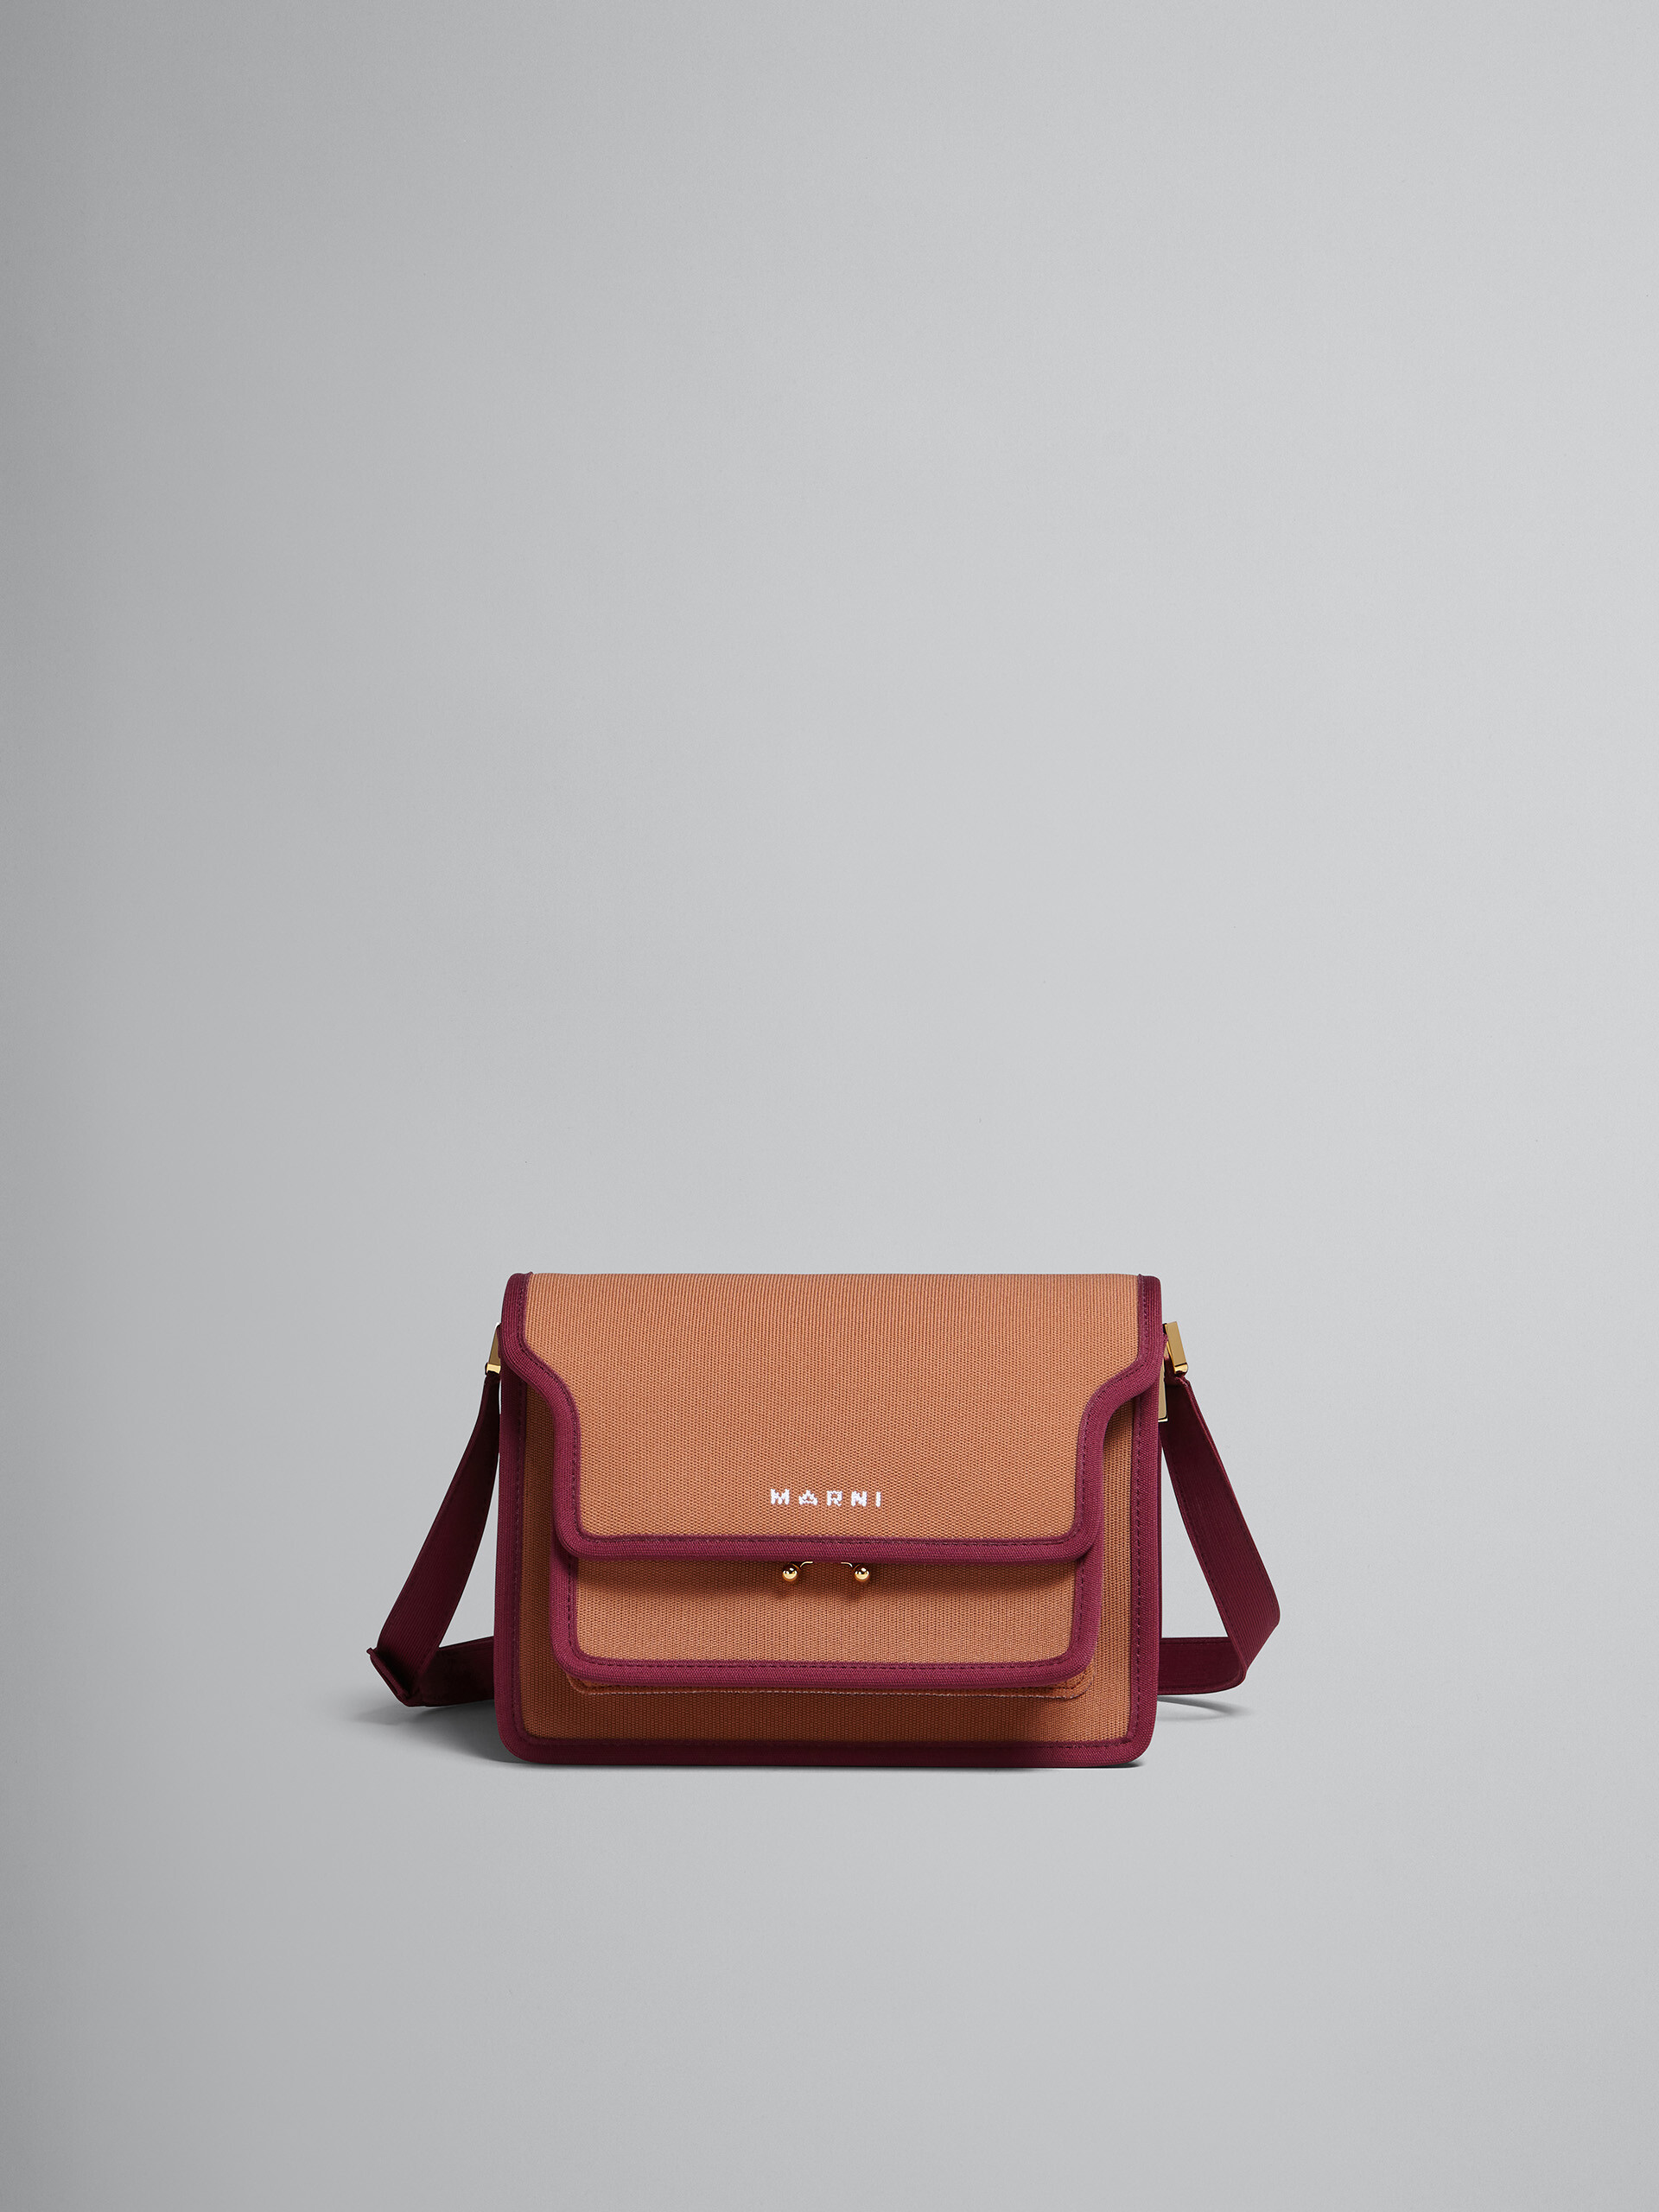 TRUNK SOFT medium bag in brown and purple jacquard - Shoulder Bag - Image 1